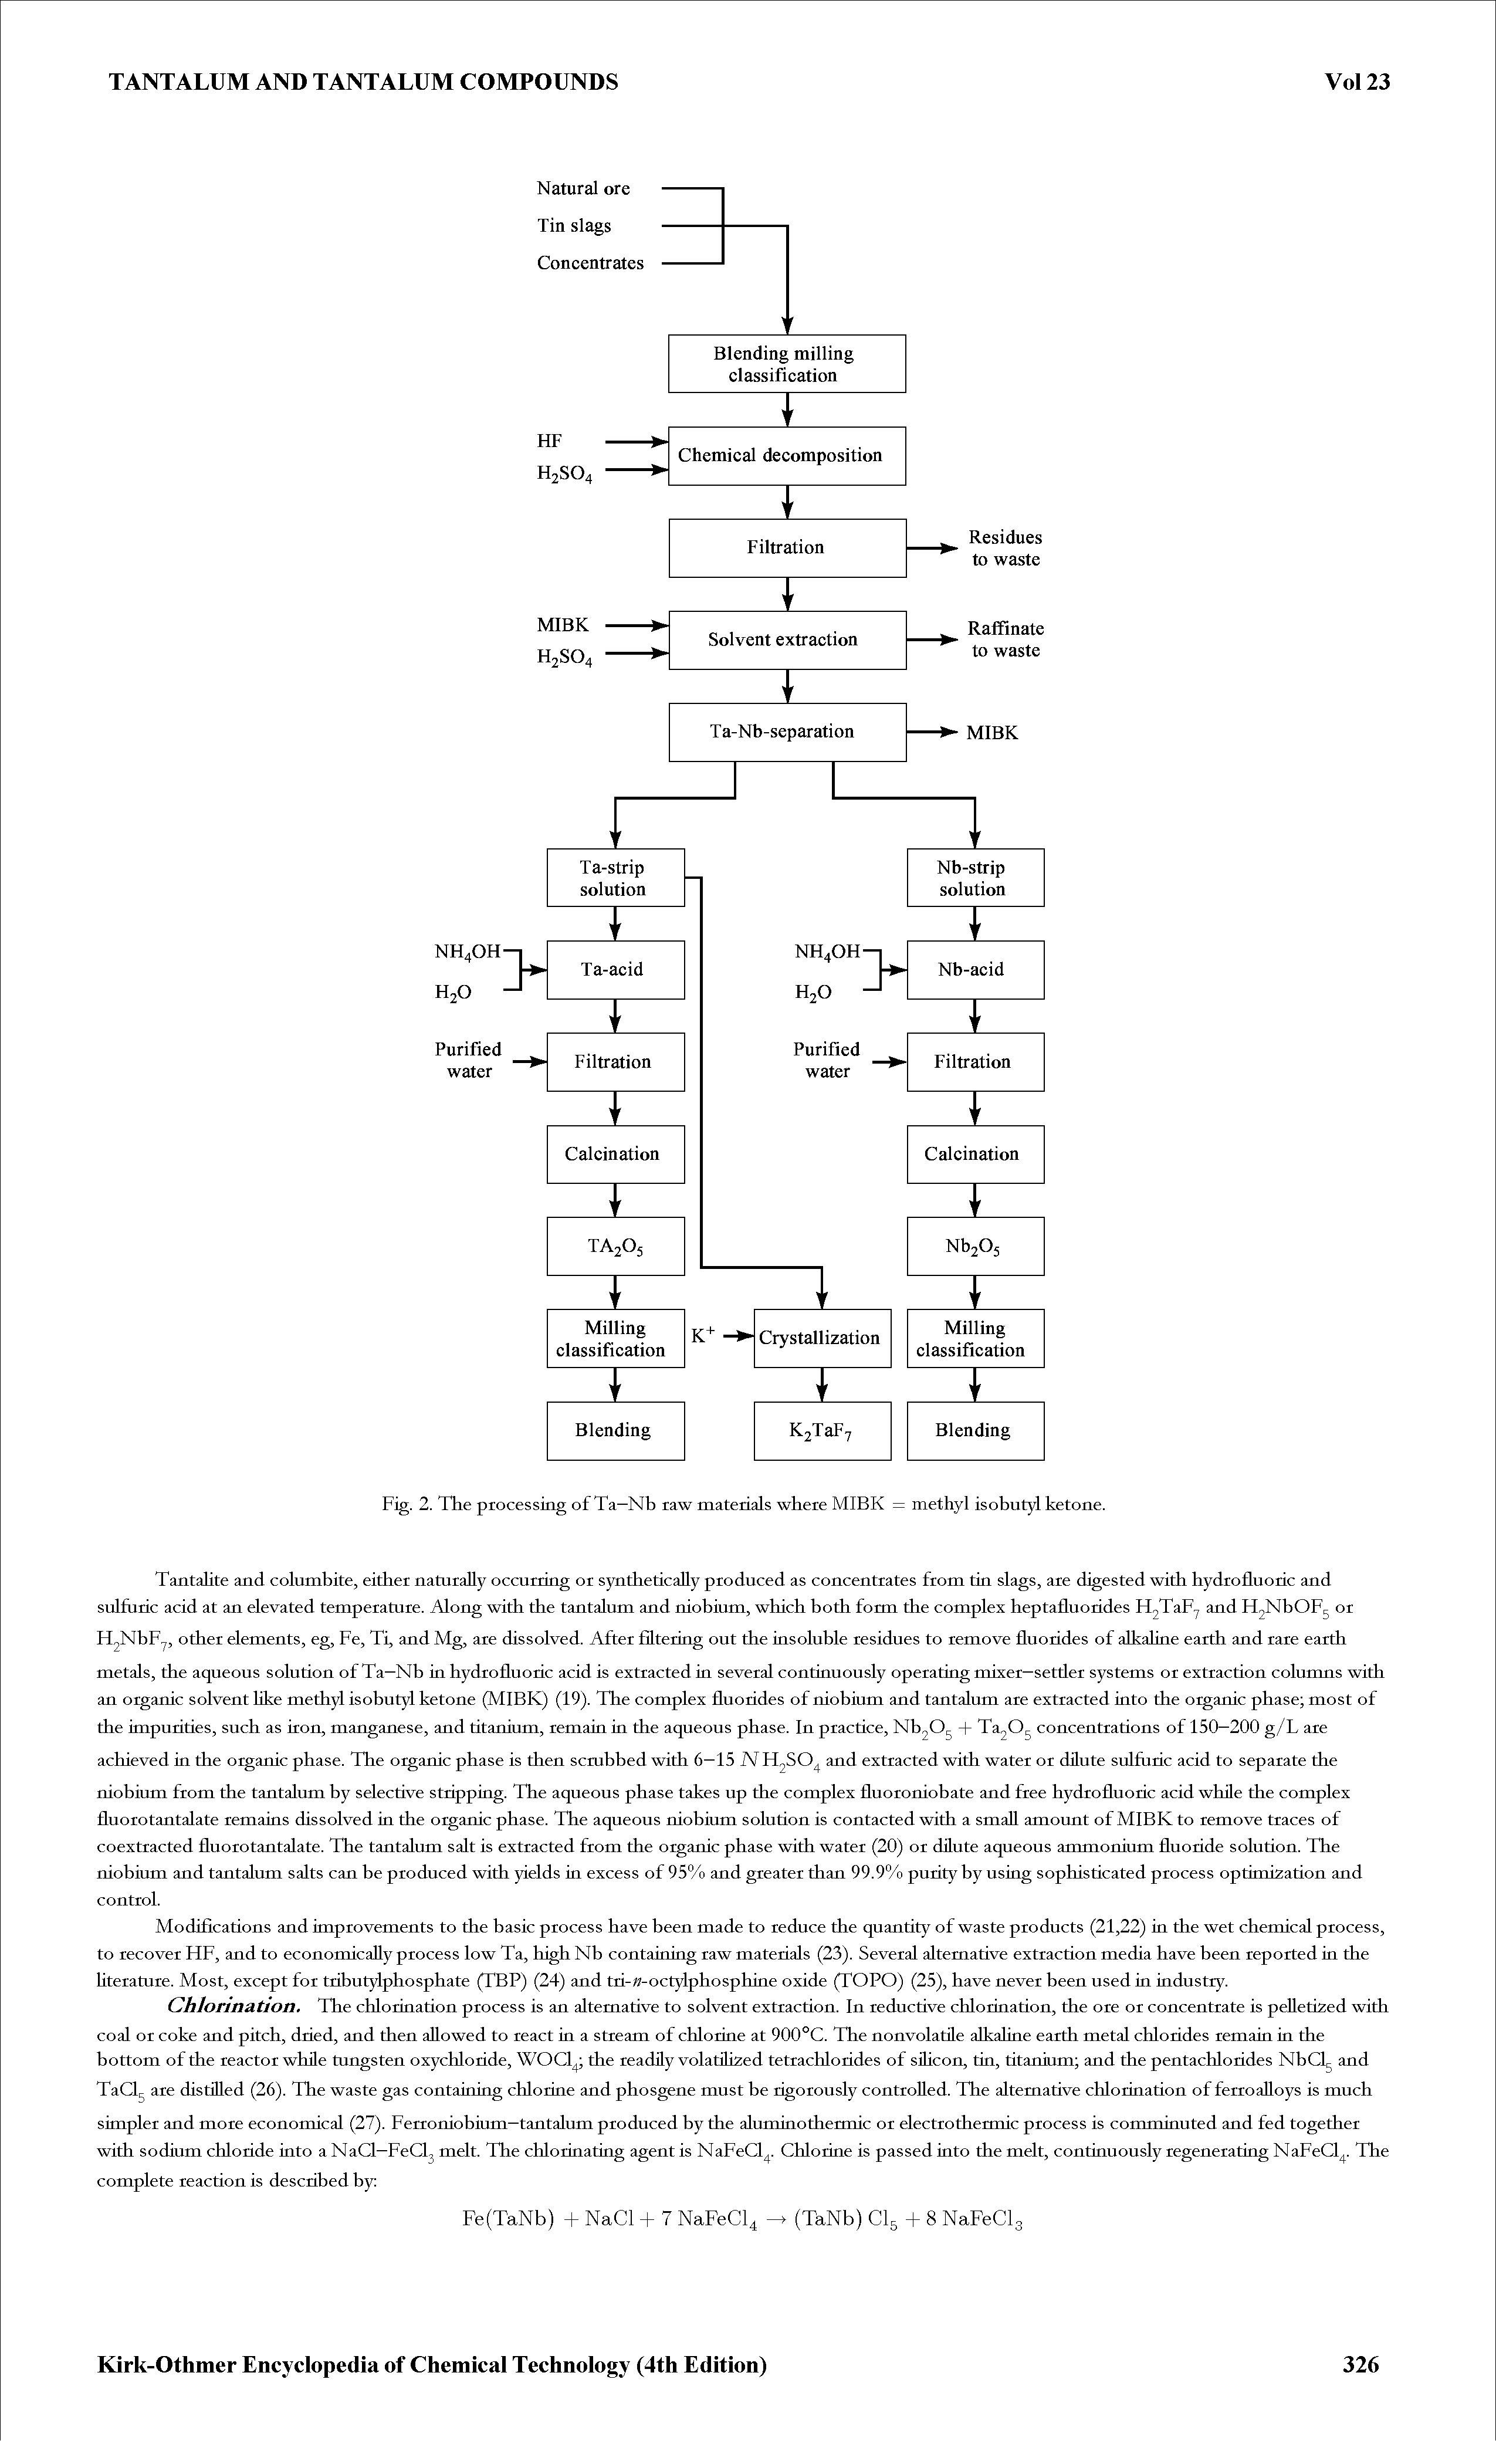 Fig. 2. The processing of Ta—Nb raw materials where MIBK = methyl isobutyl ketone.